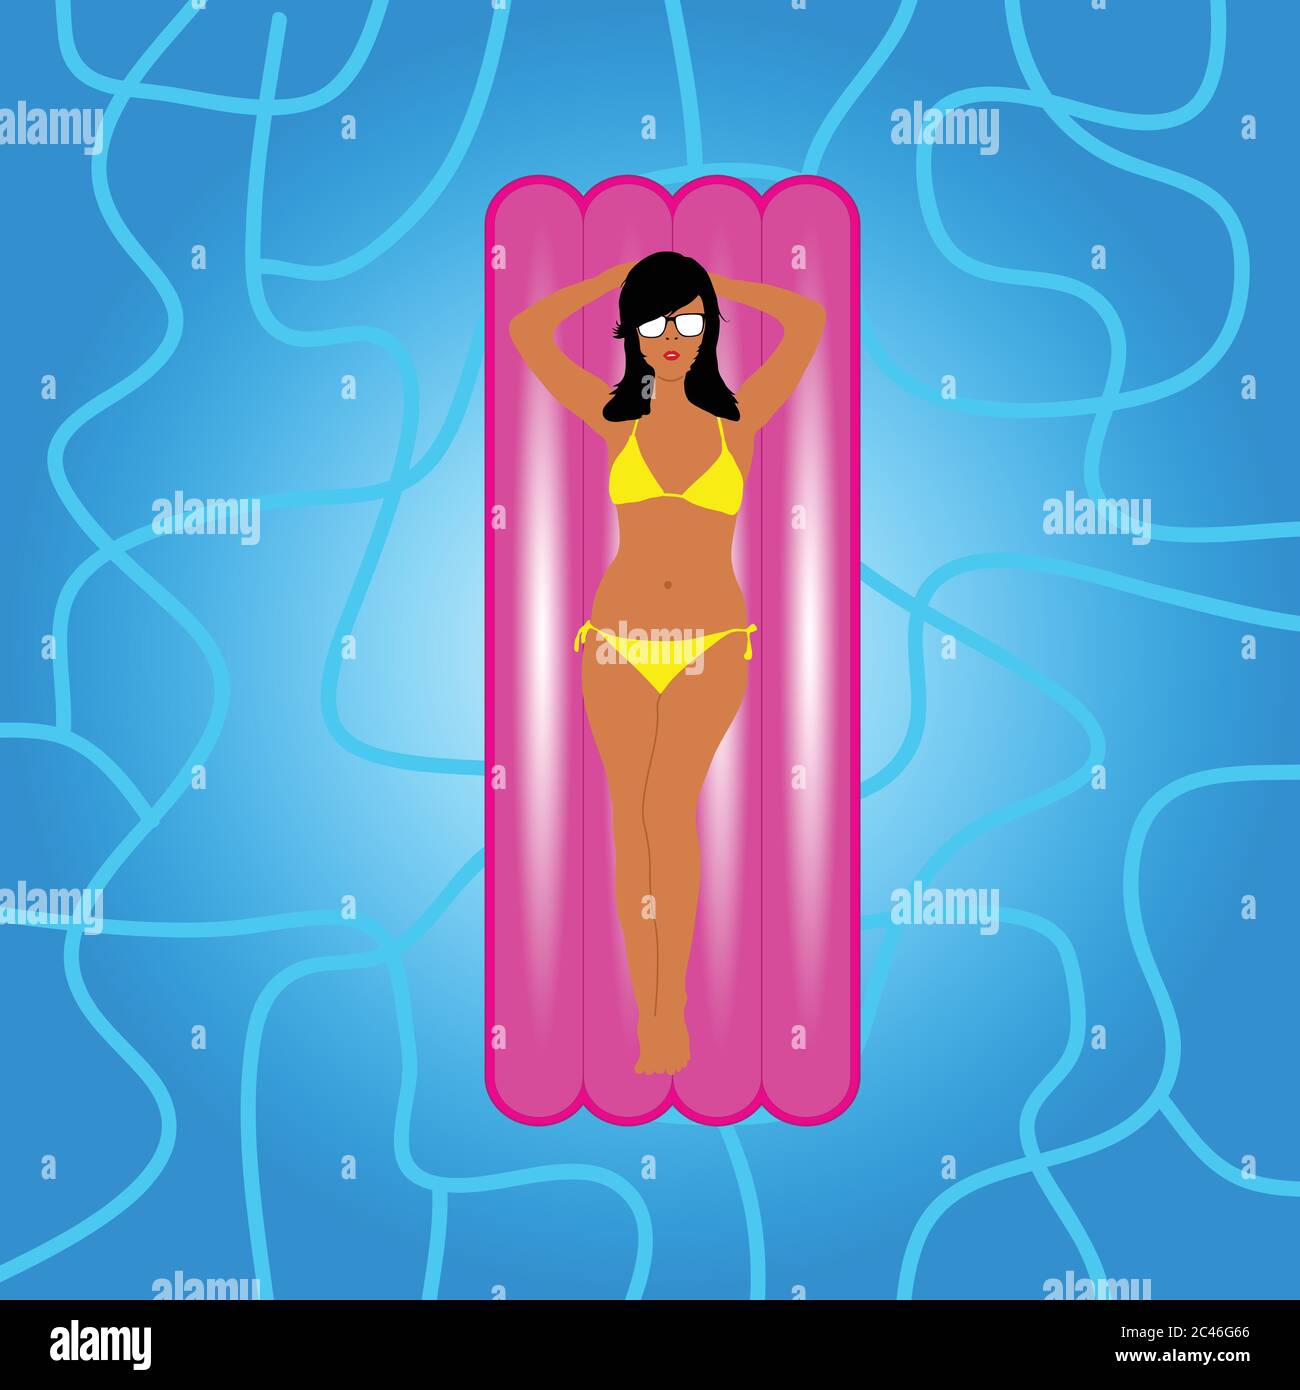 Woman sleeping in bikini on Stock Vector Images - Alamy